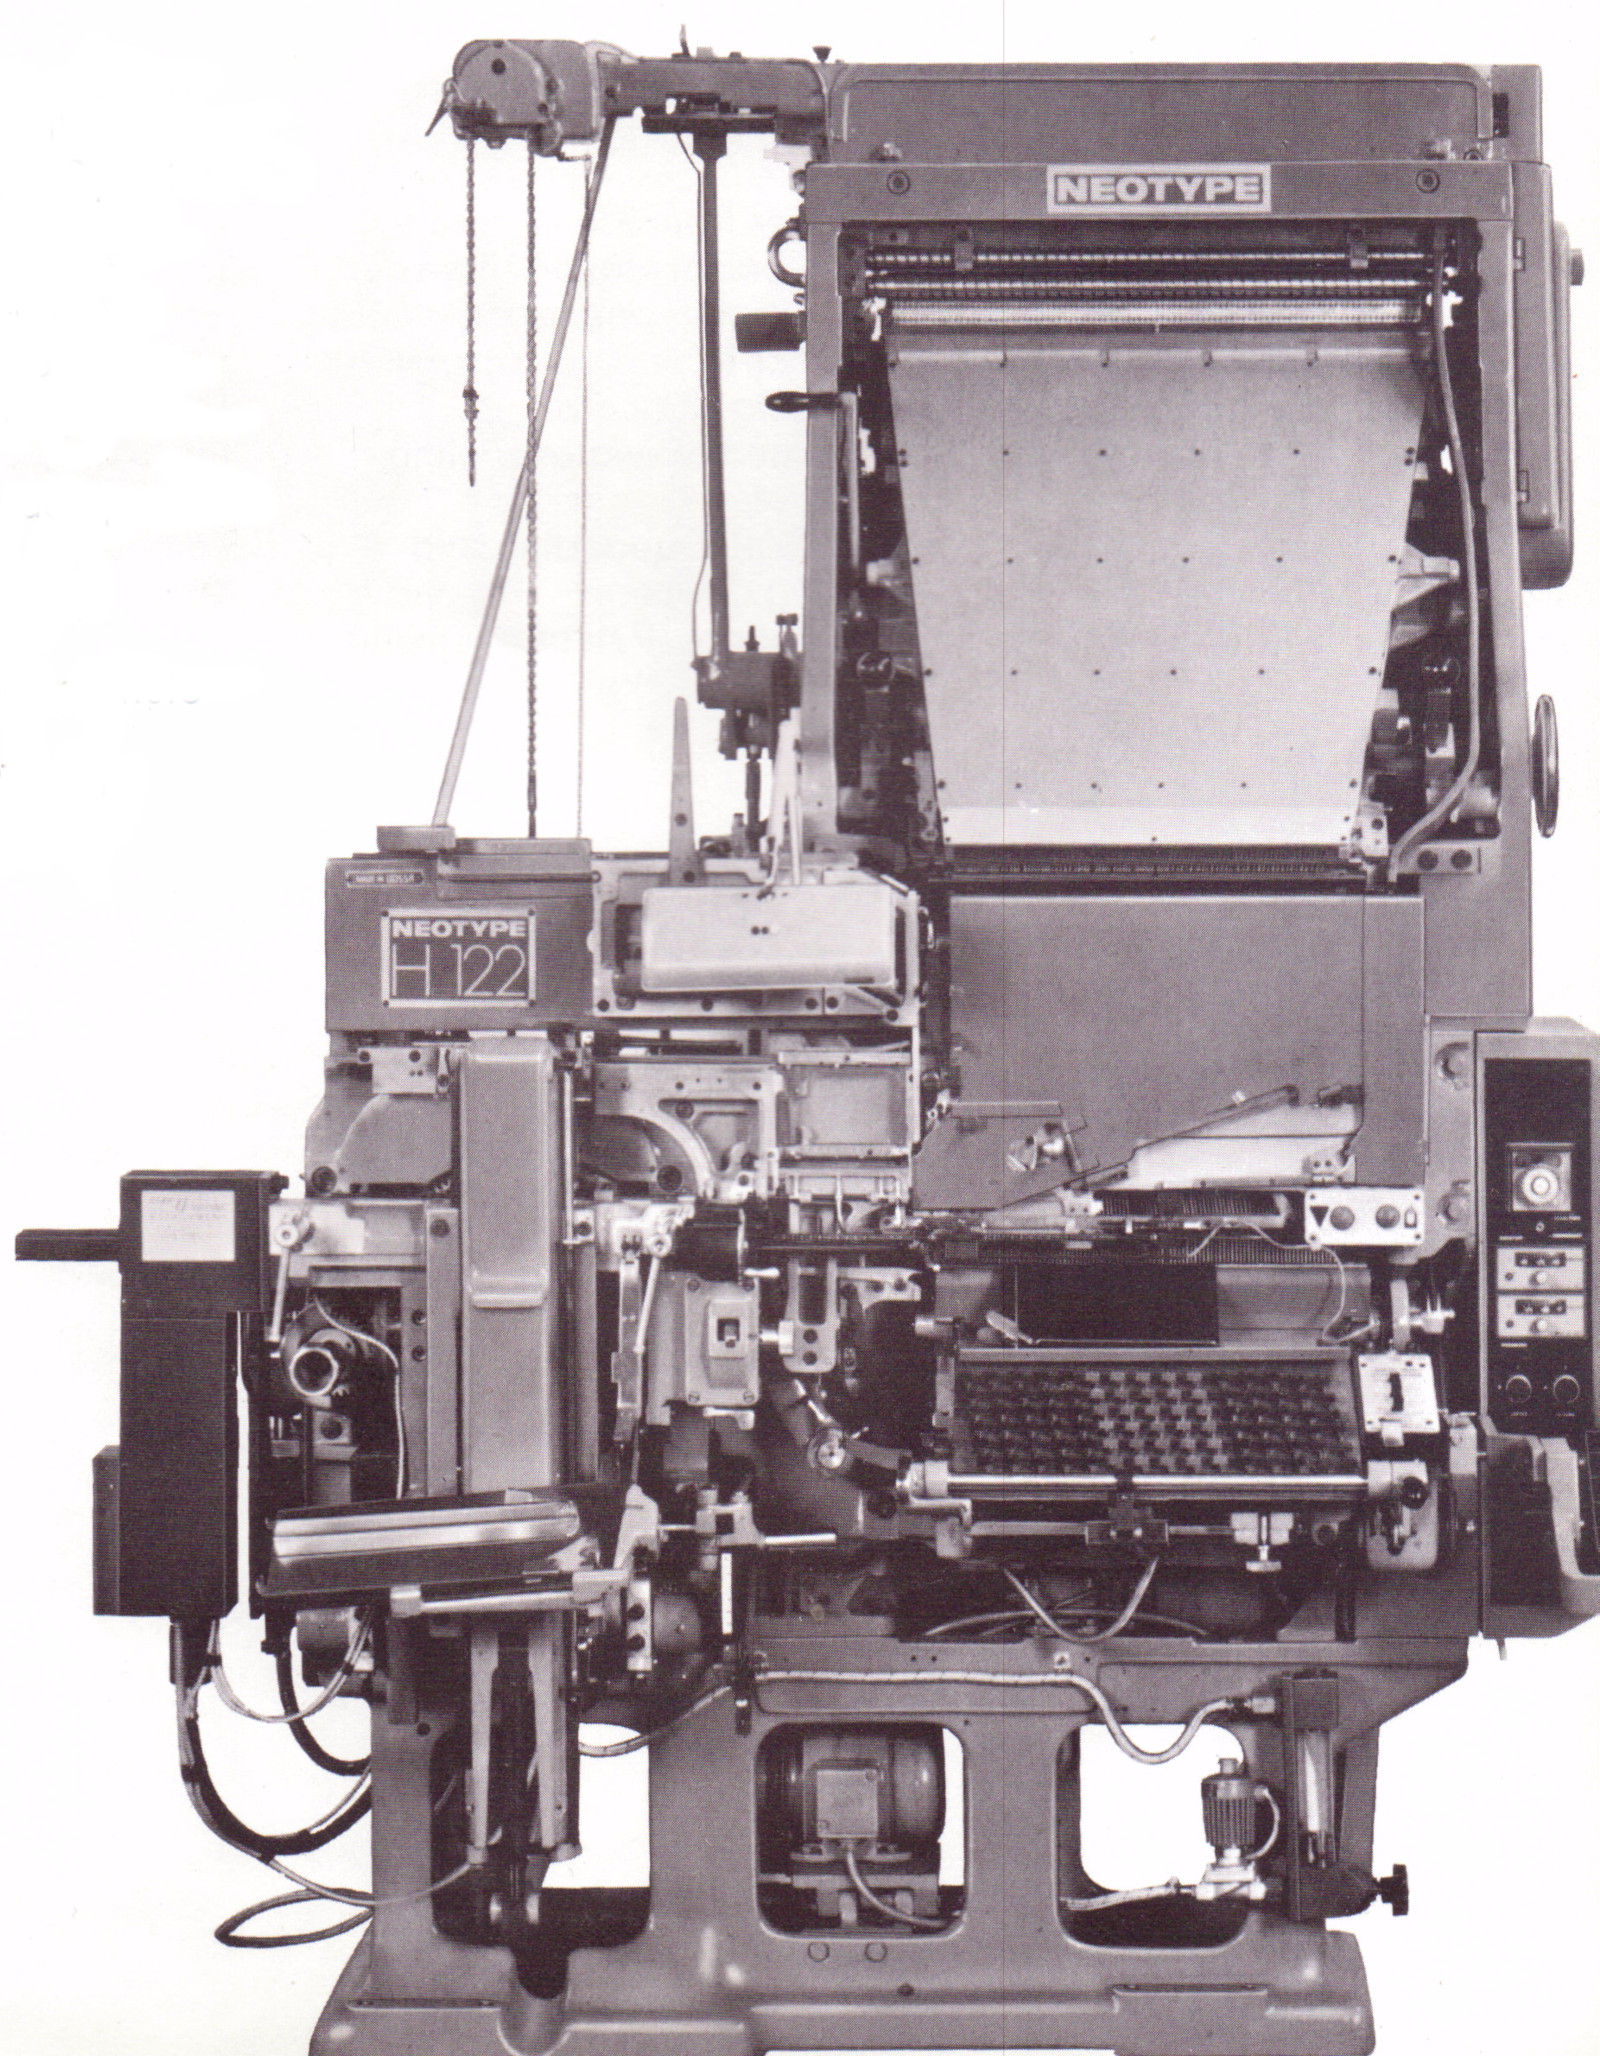 Neotype H122 Russian linecasting typesetting machine